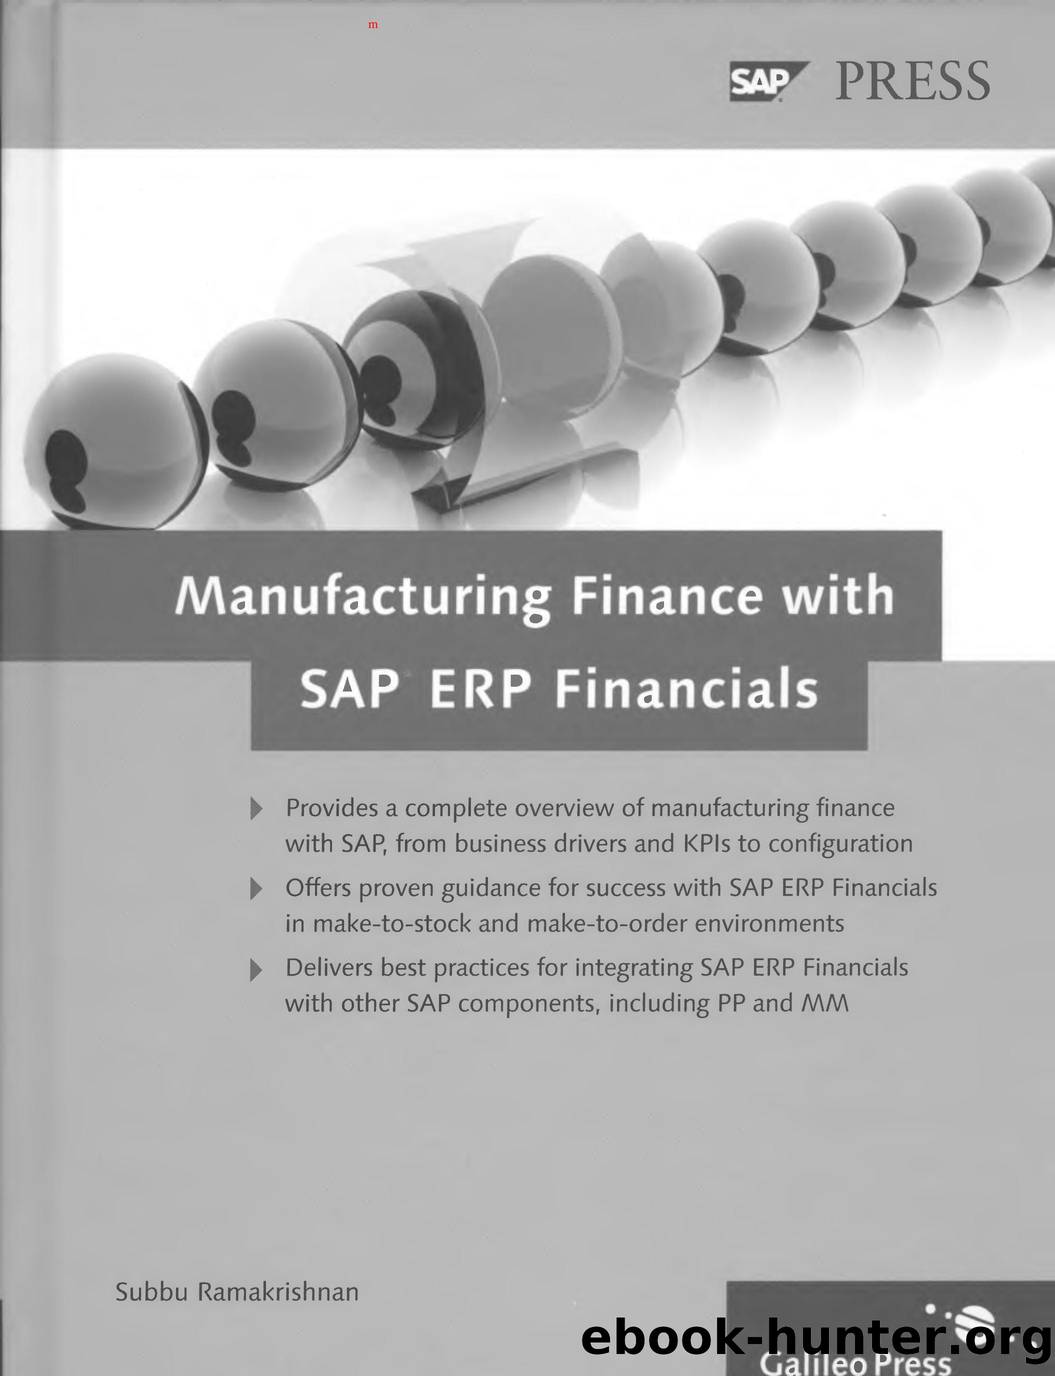 SAP Press by Manufacturing Finance & SAP ERP Financials